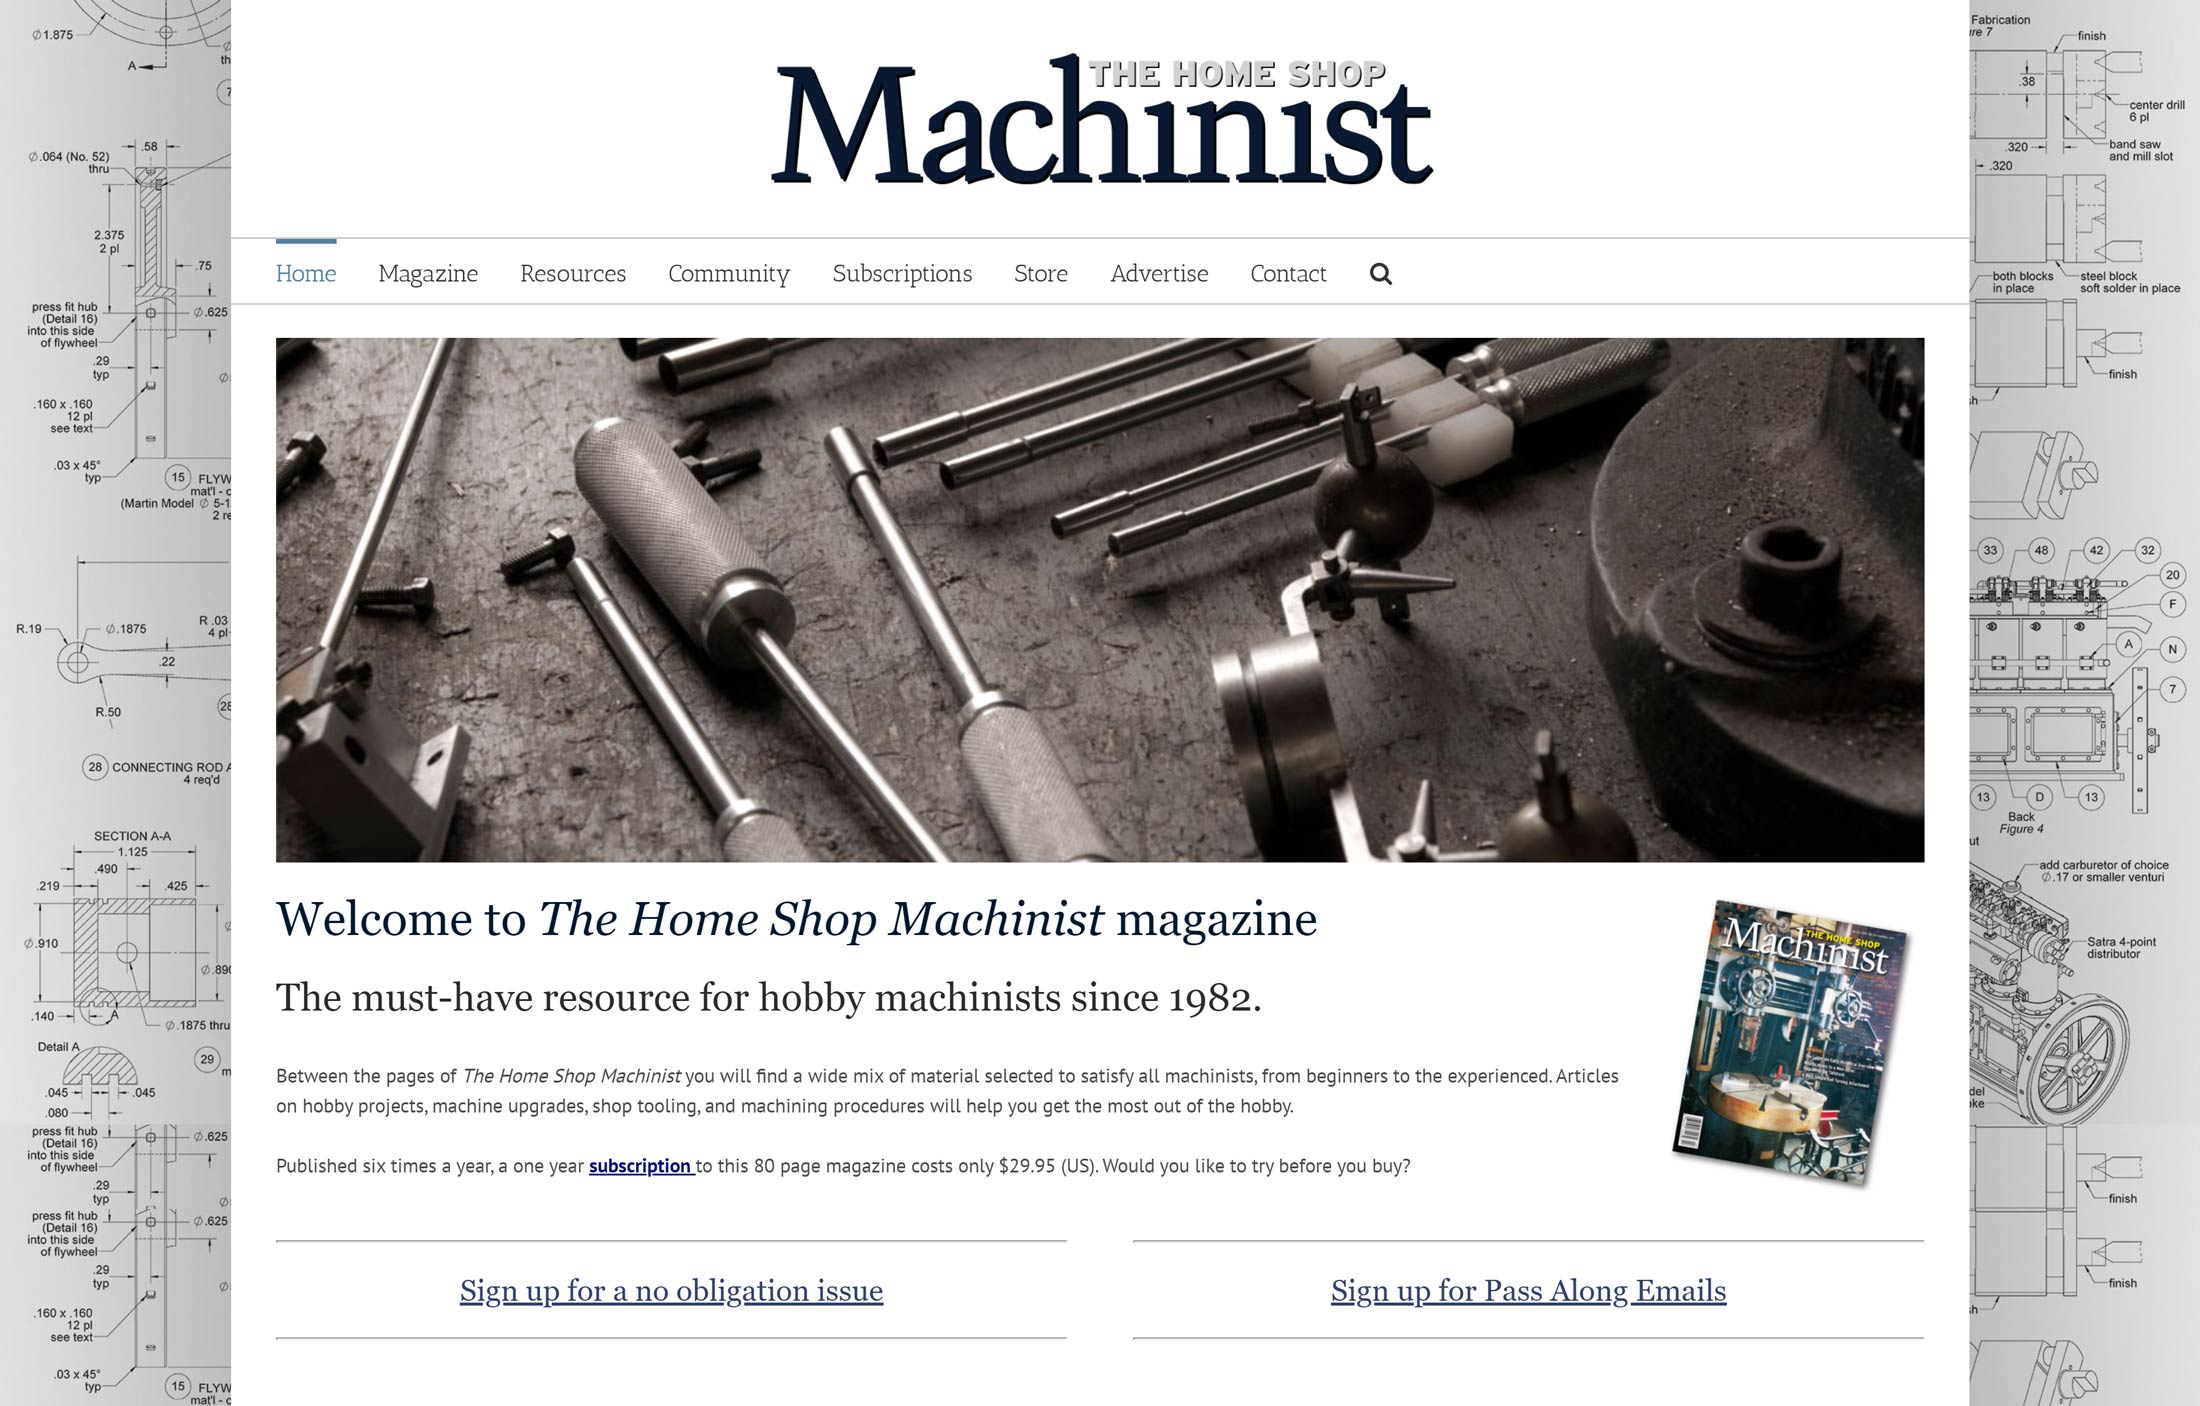 The Home Shop Machinist